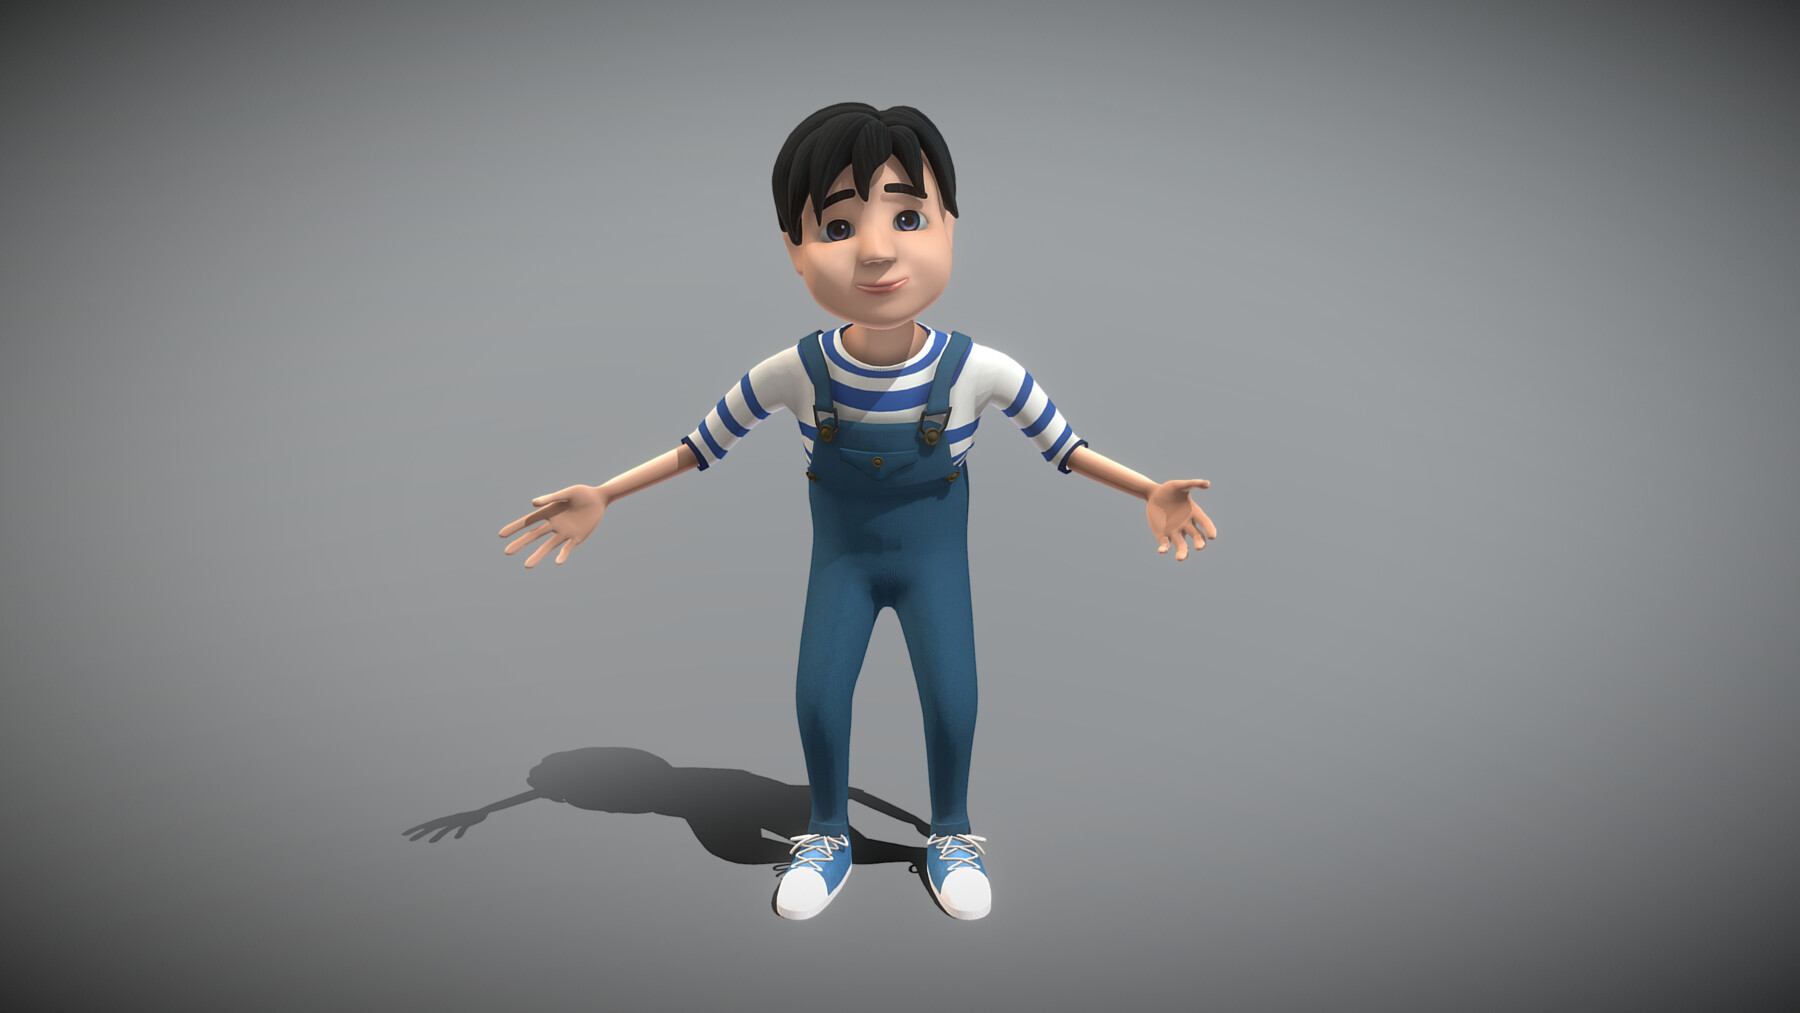 Cute Cardboard Boy in Characters - UE Marketplace